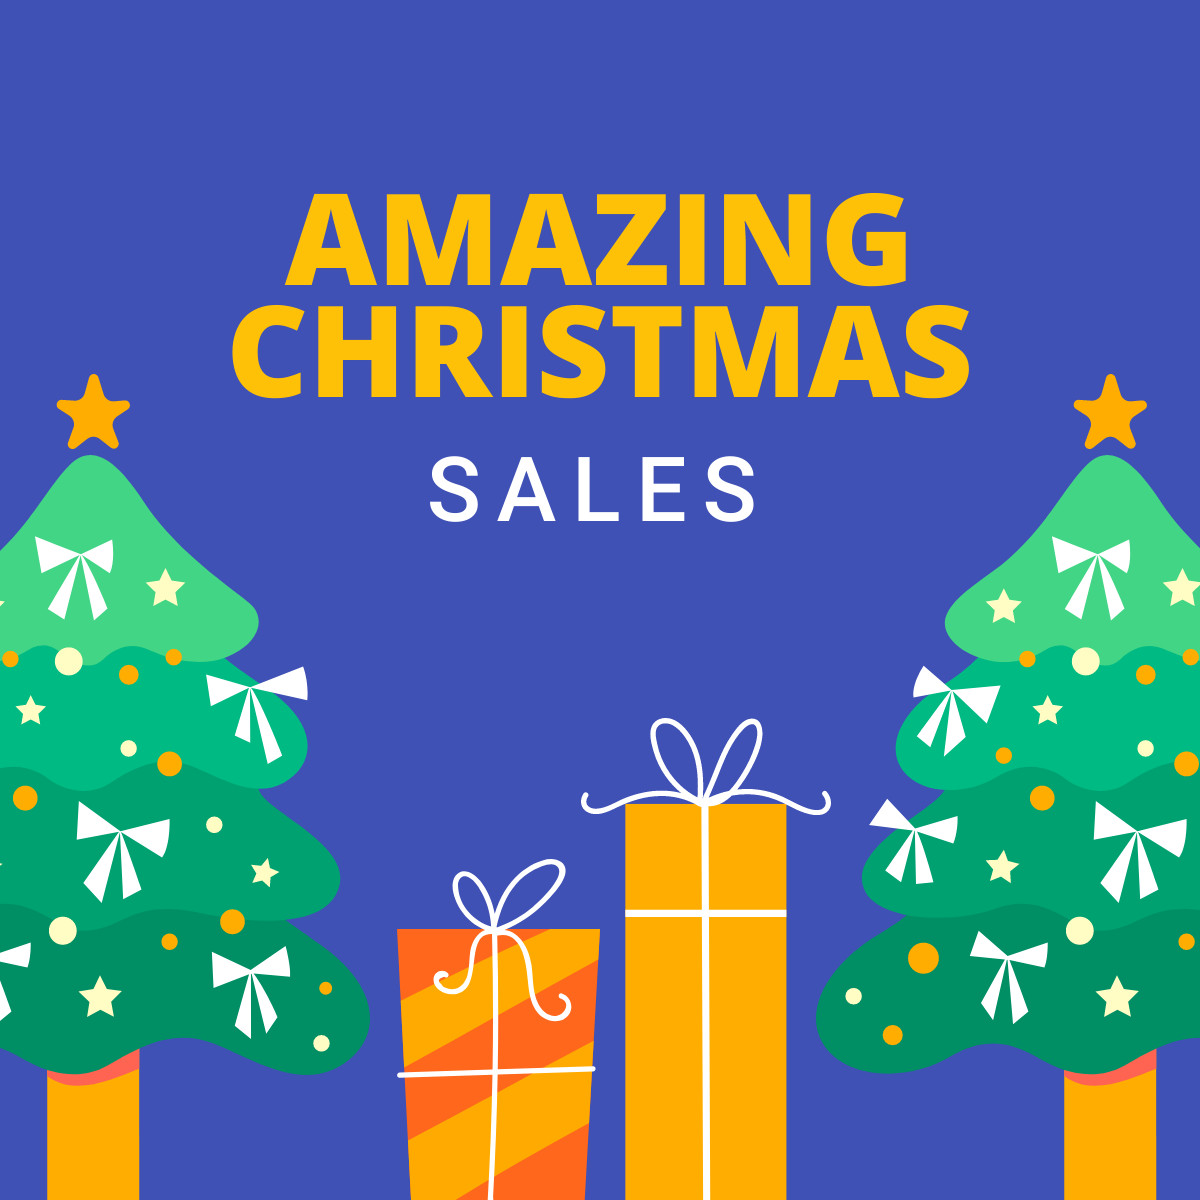 Amazing Christmas Sales Inline Rectangle 300x250